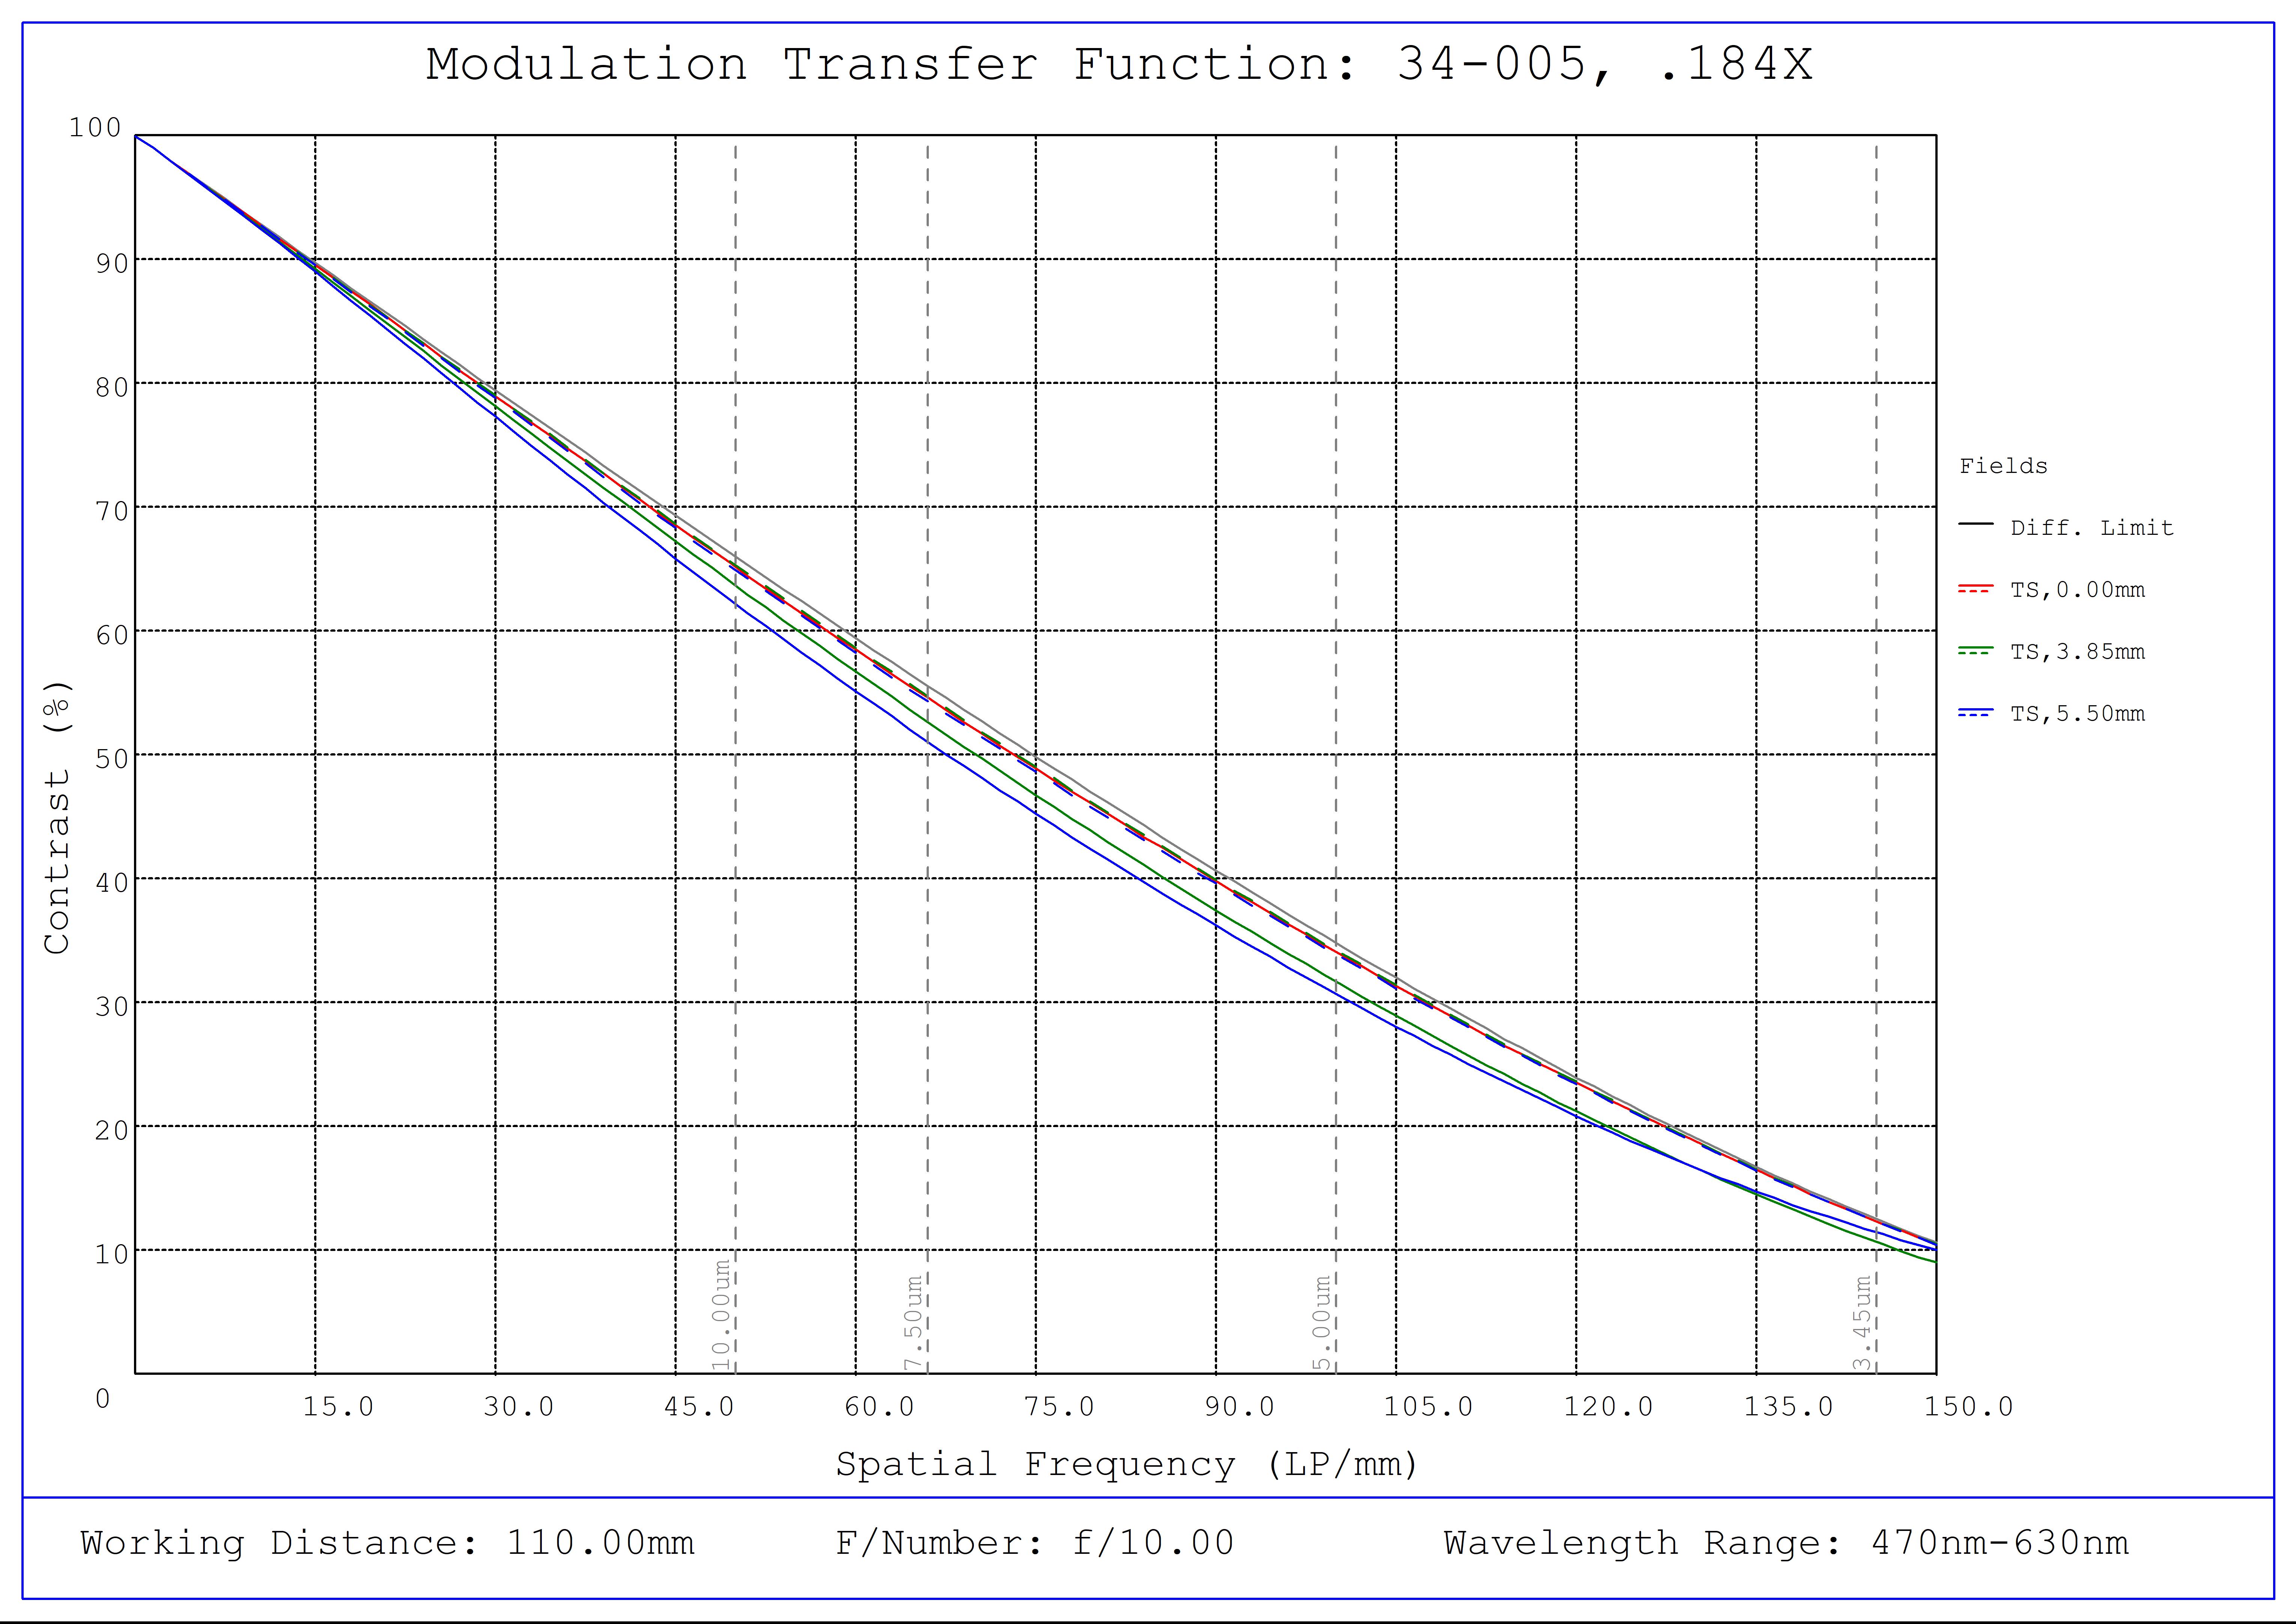 #34-005, 0.184X, 2/3" C-Mount TitanTL® Telecentric Lens, Modulated Transfer Function (MTF) Plot, 110mm Working Distance, f10